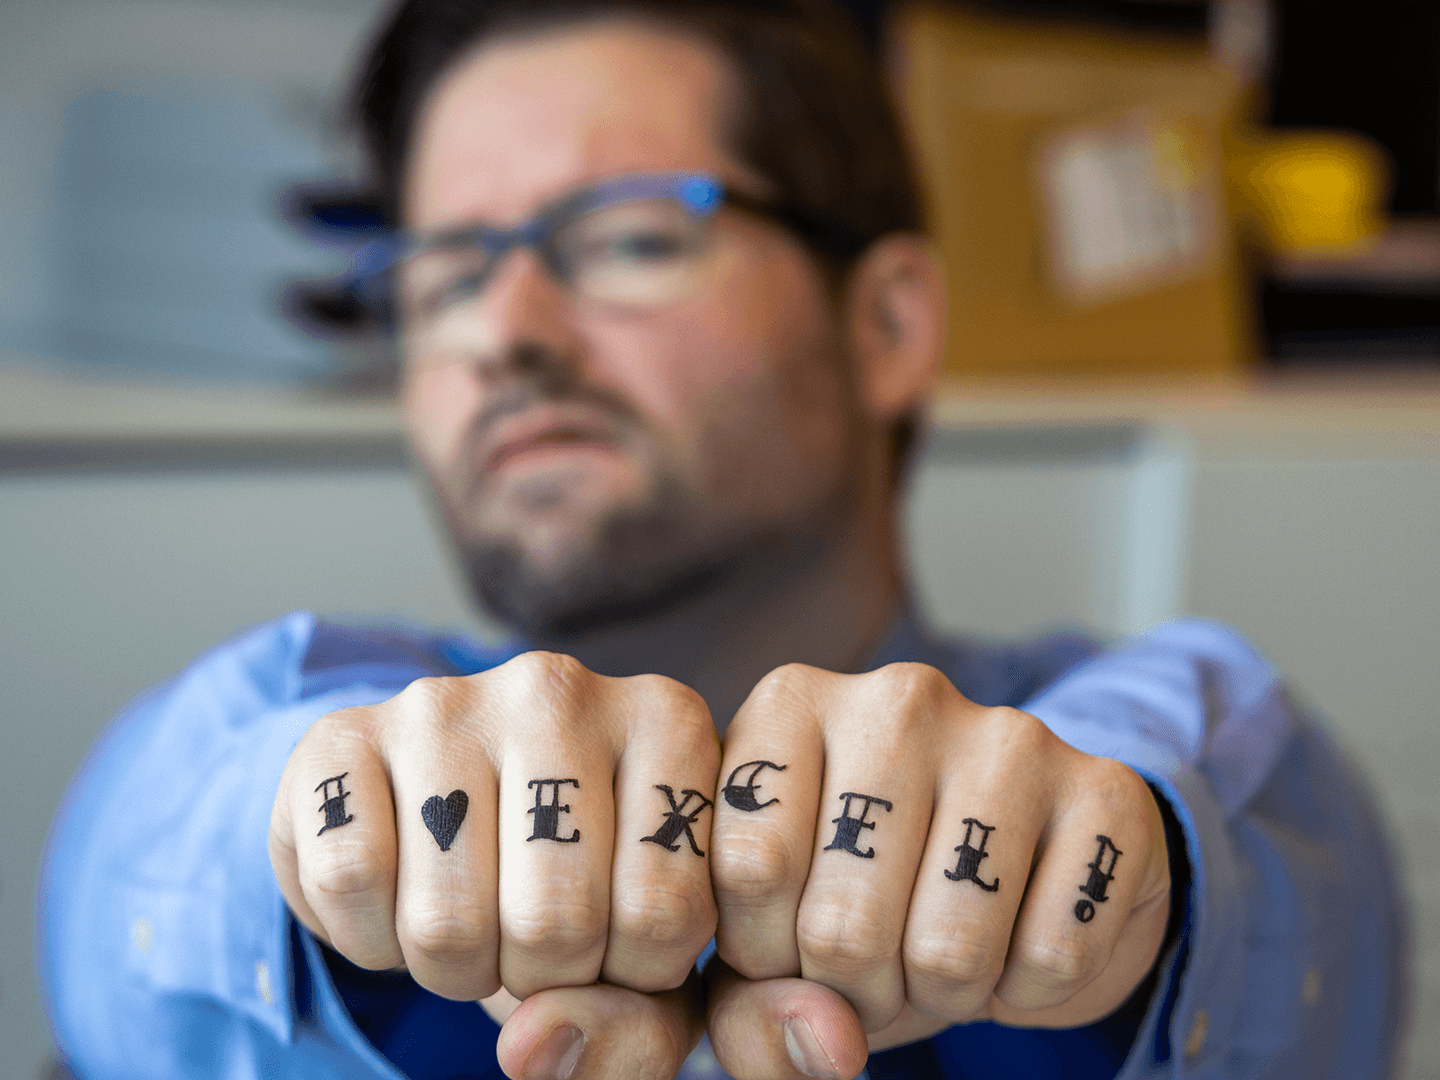 Badass tattoo boekhouder "I love excel!"